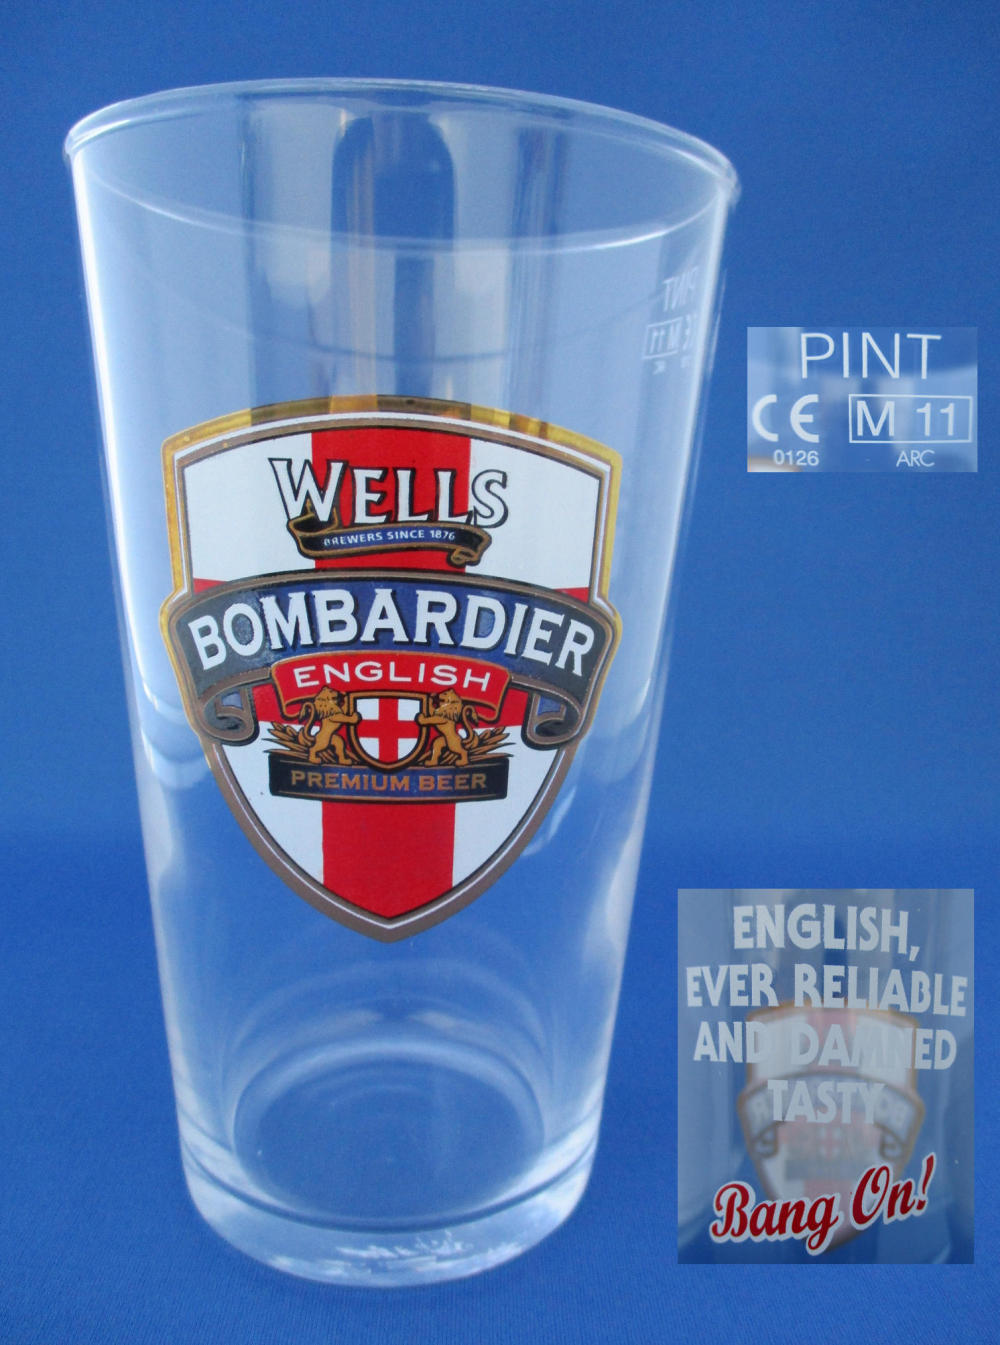 Bombardier Beer Glass 001025B077